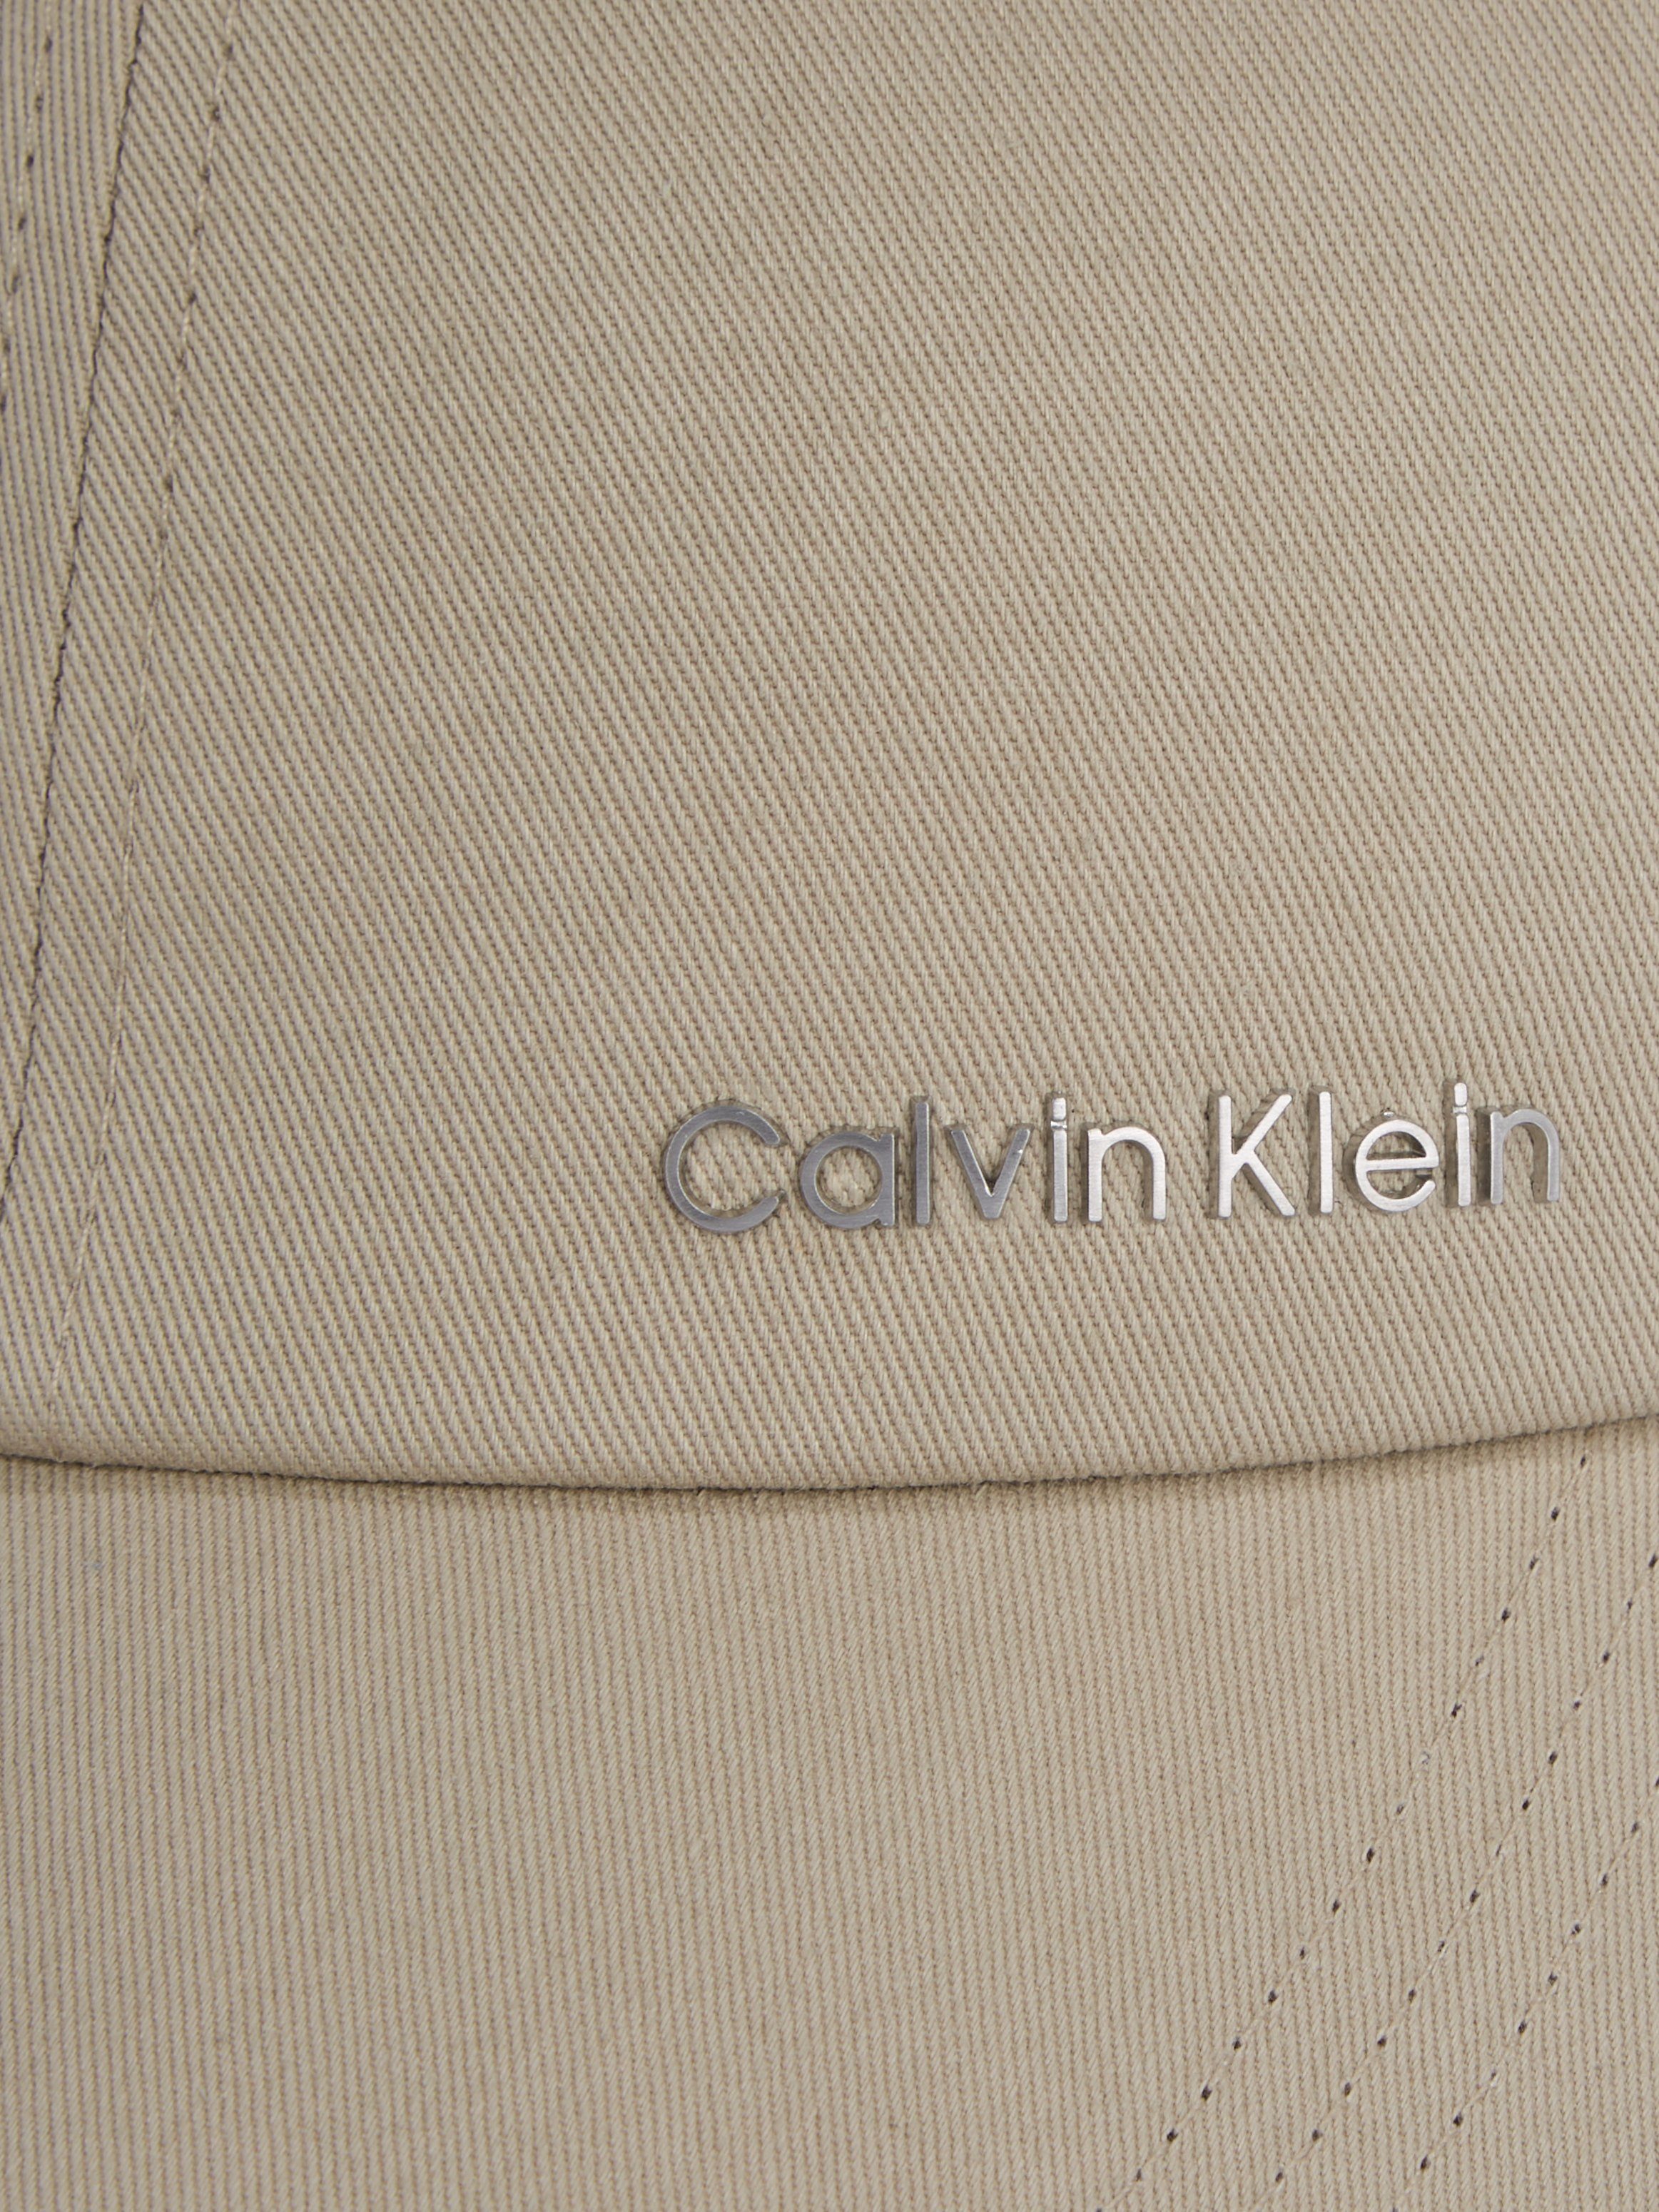 Calvin Klein Baseballcap METAL LETTERING BB CAP